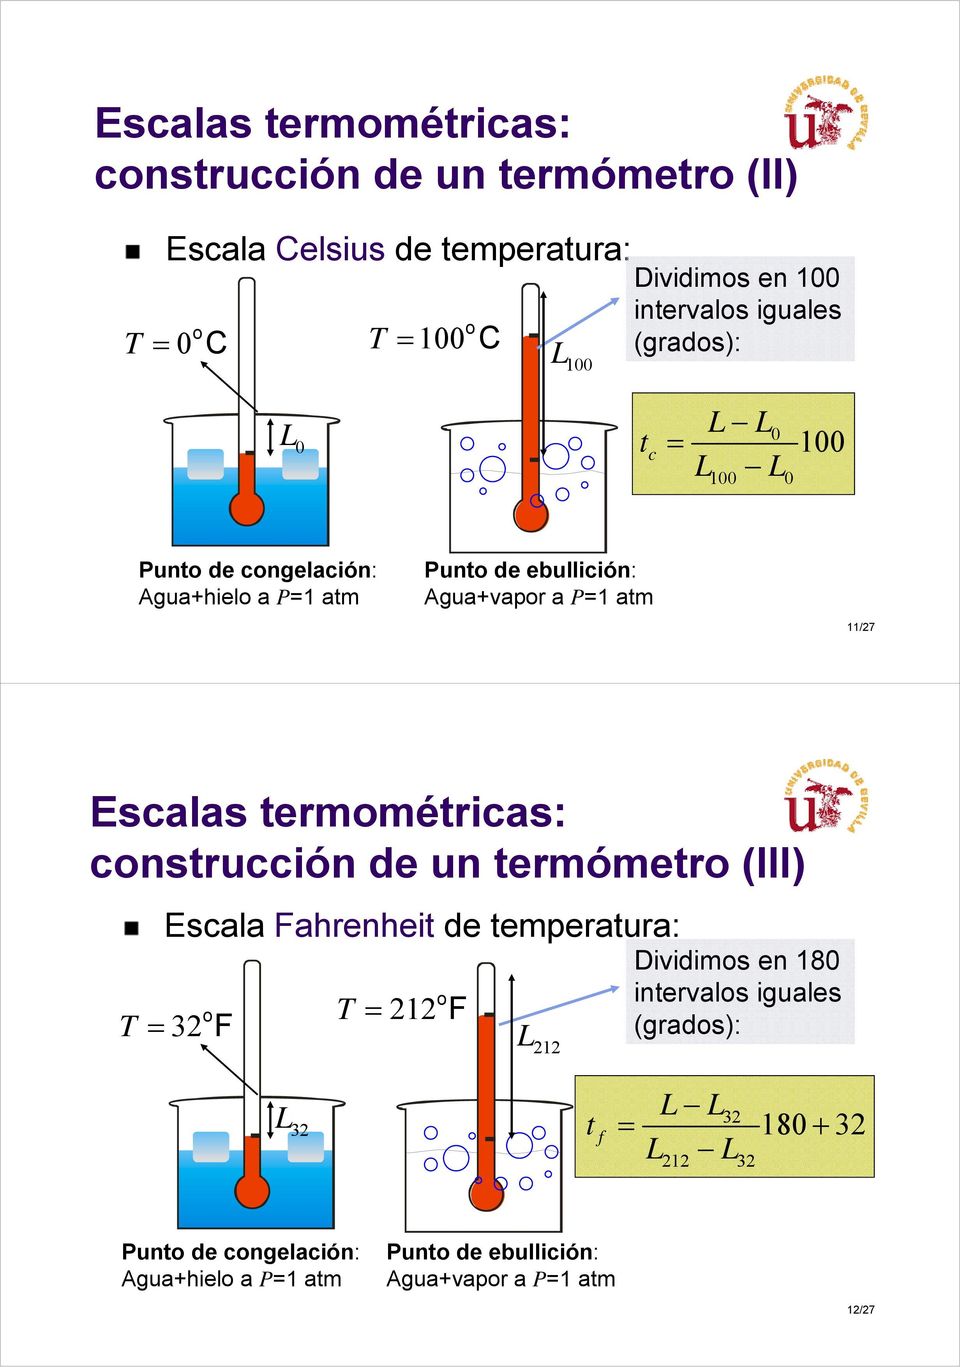 Escalas termométricas: construcción de un termómetro (III) Escala Fahrenheit de temperatura: T 32 o F T 212 o F L 212 Dividimos en 180